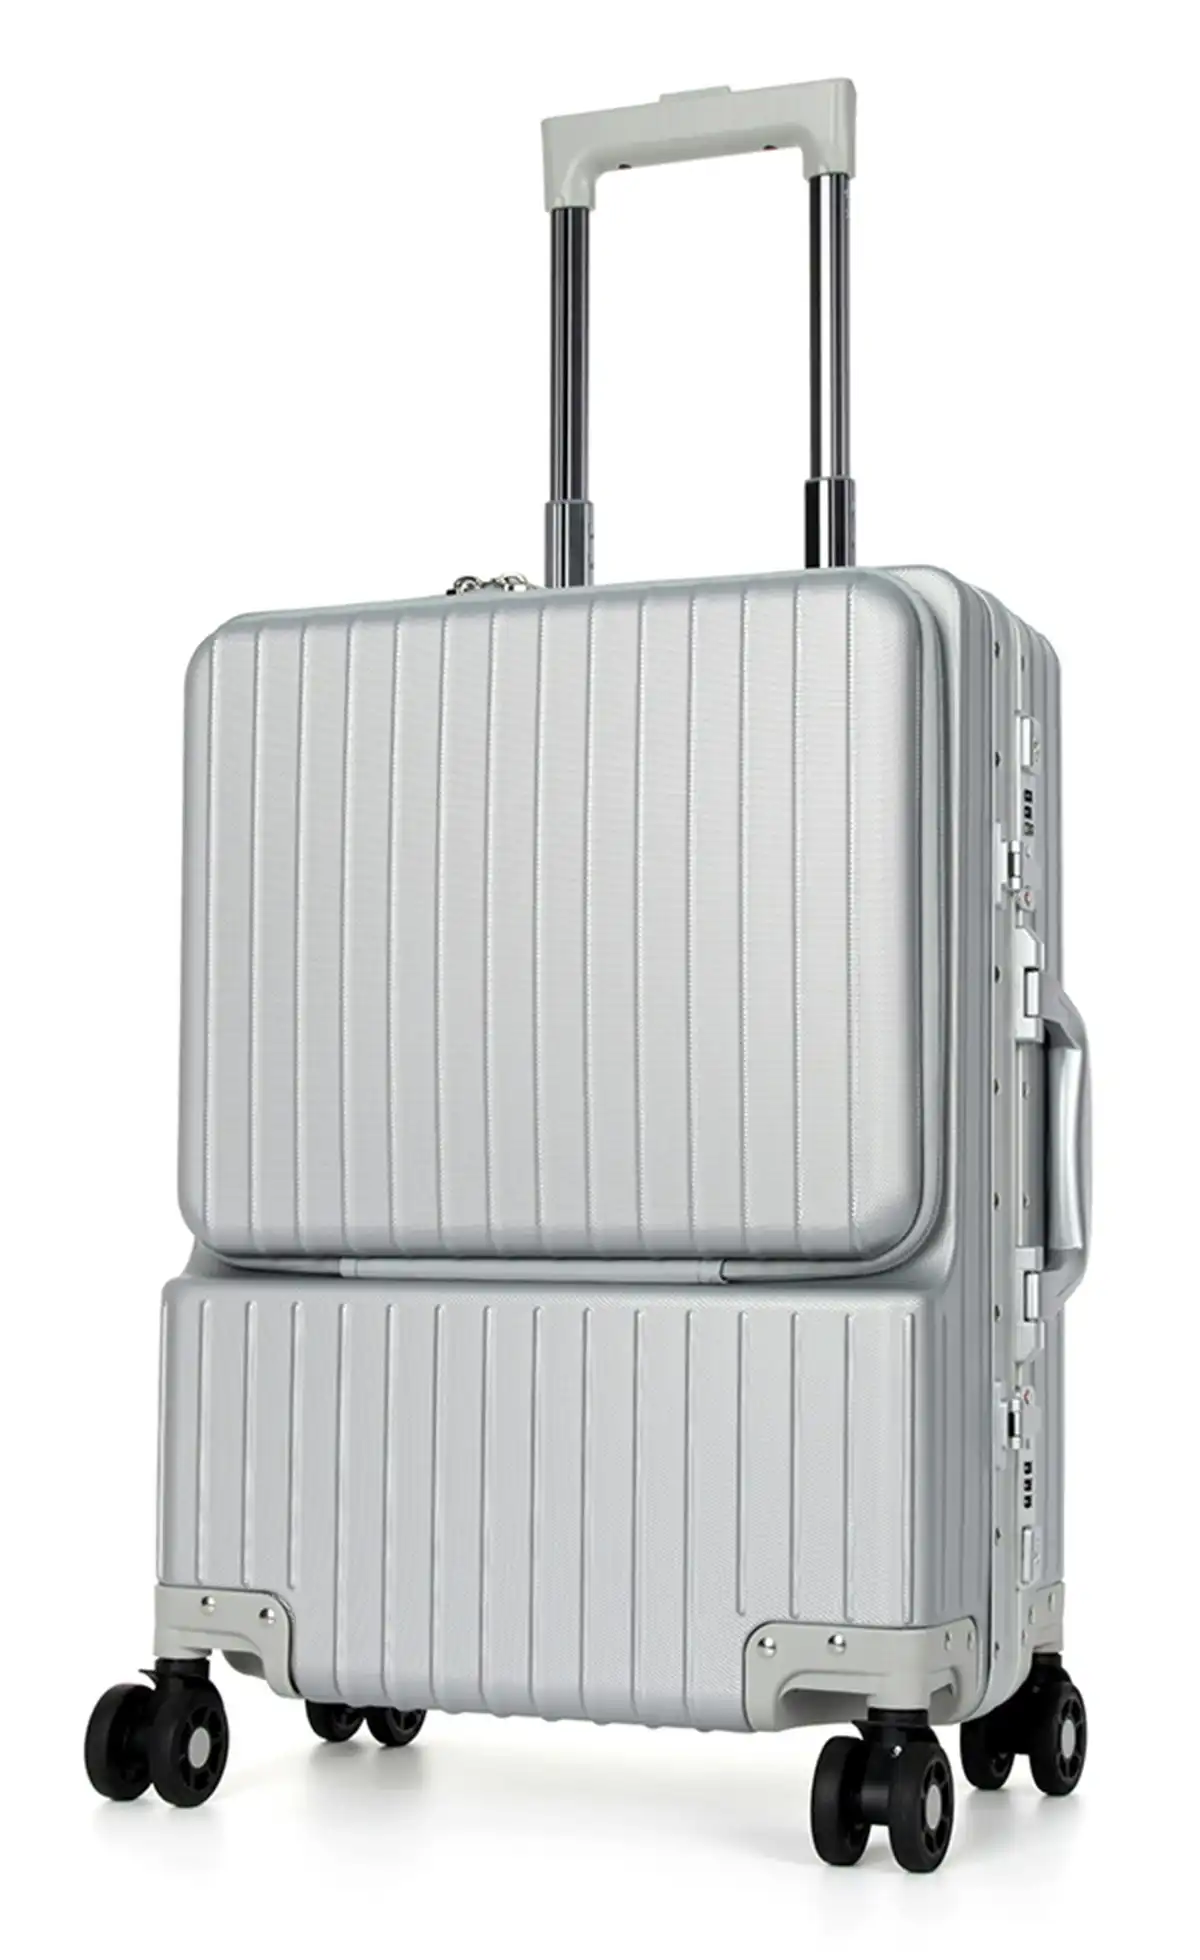 Suissewin Swiss Aluminium Luggage Suitcase Lightweight TSA locker 8 wheels Check In HardCase SN8610B Silver